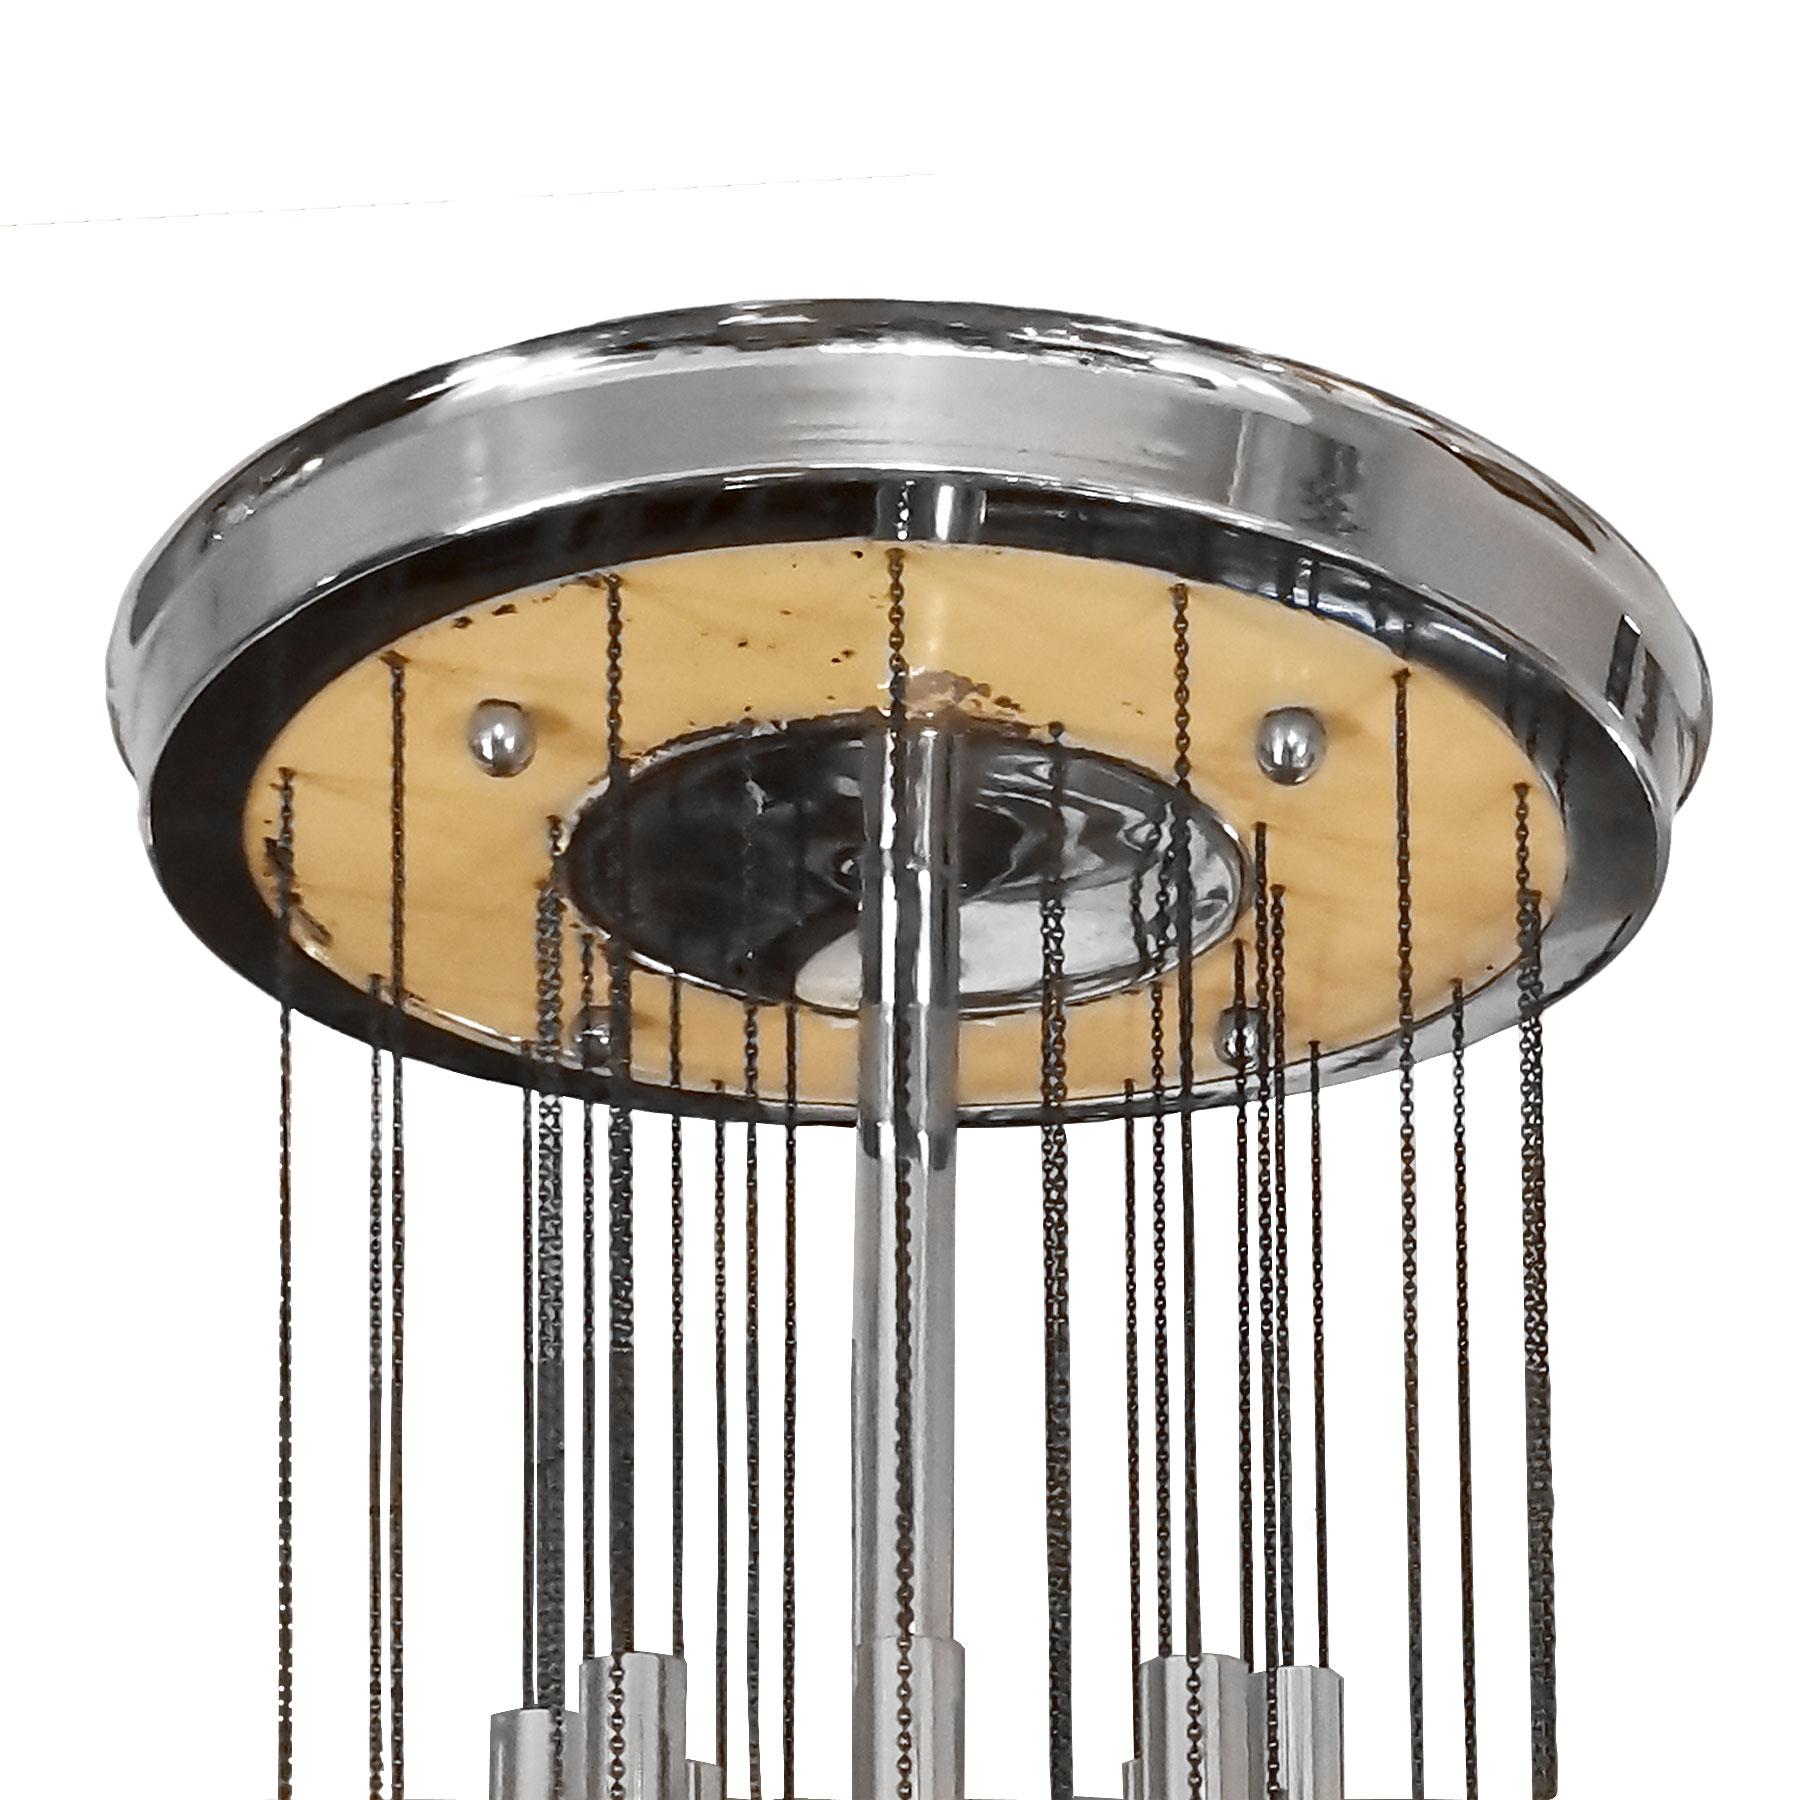 Large pendant with three tiers of chrome-plated metal tubes with glass balls, 8-light. Original condition.
Design: Gaetano Sciolari
Italy, circa 1960.